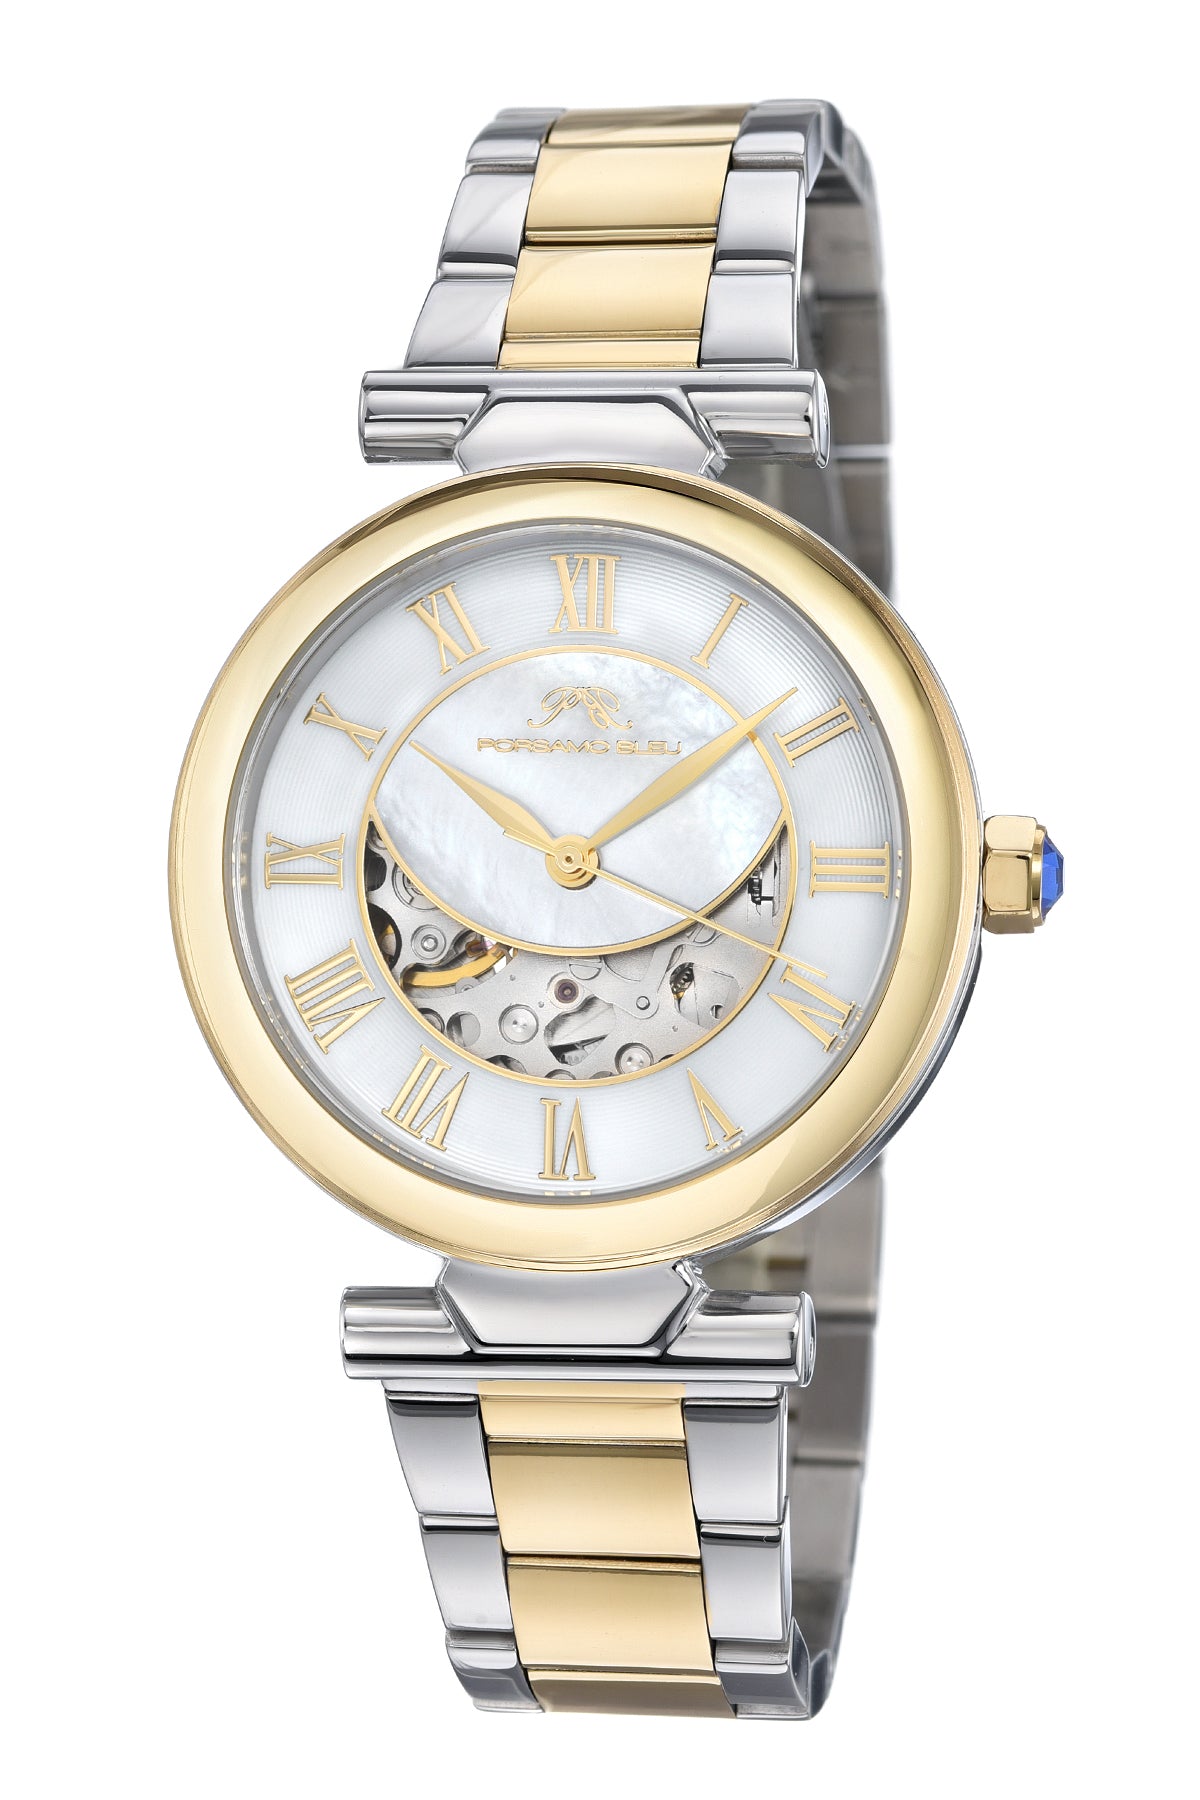 Porsamo Bleu Colette Luxury Automatic Women's Stainless Steel Watch, Gold, Silver 1101DCOS